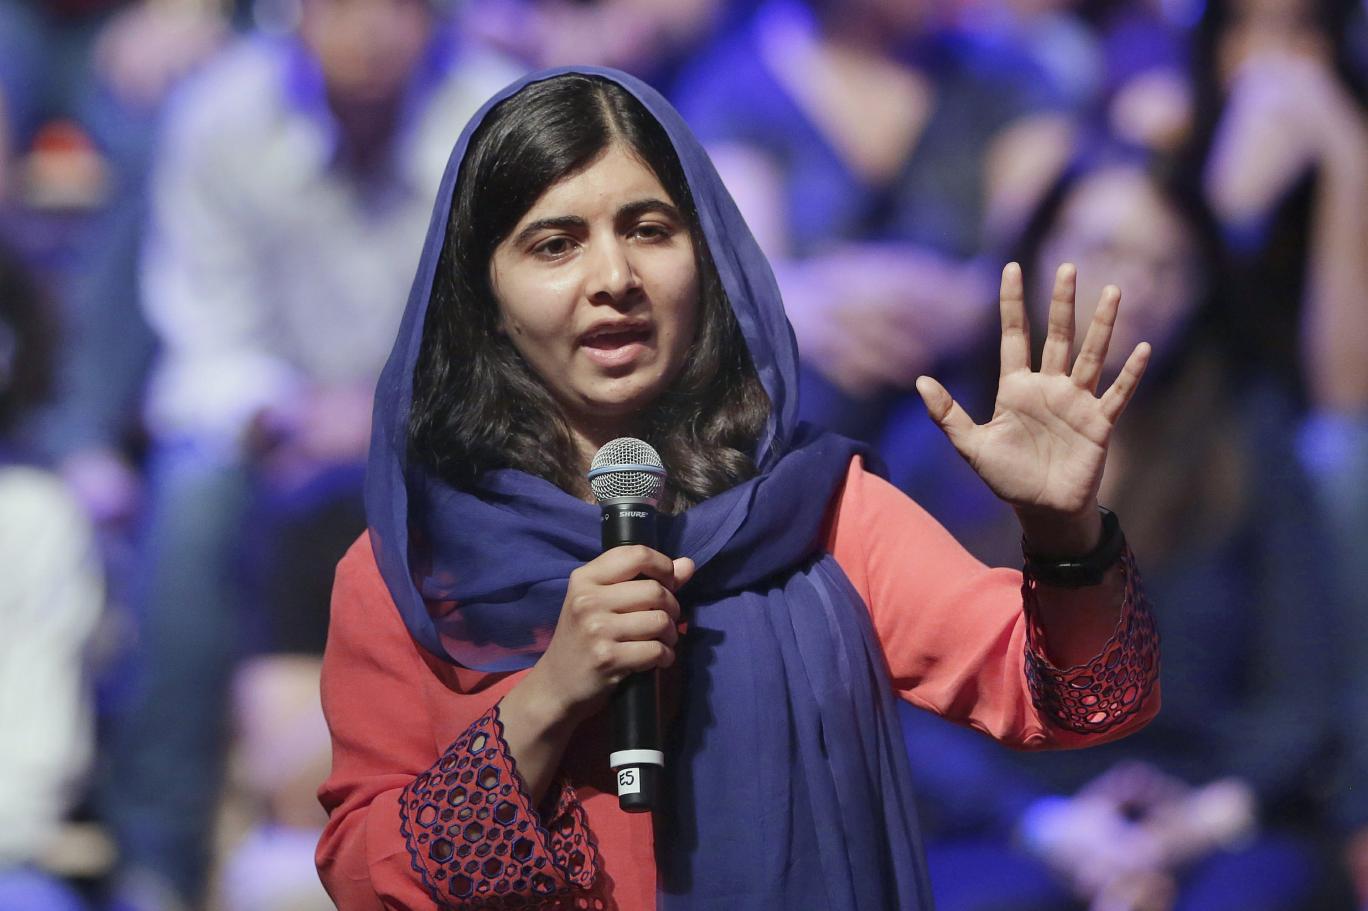 Malala Yusufzay, Hollywood’daki Müslüman temsilini eleştirdi: “Buraya ait olmadığımızı söylüyorlarmış gibi”